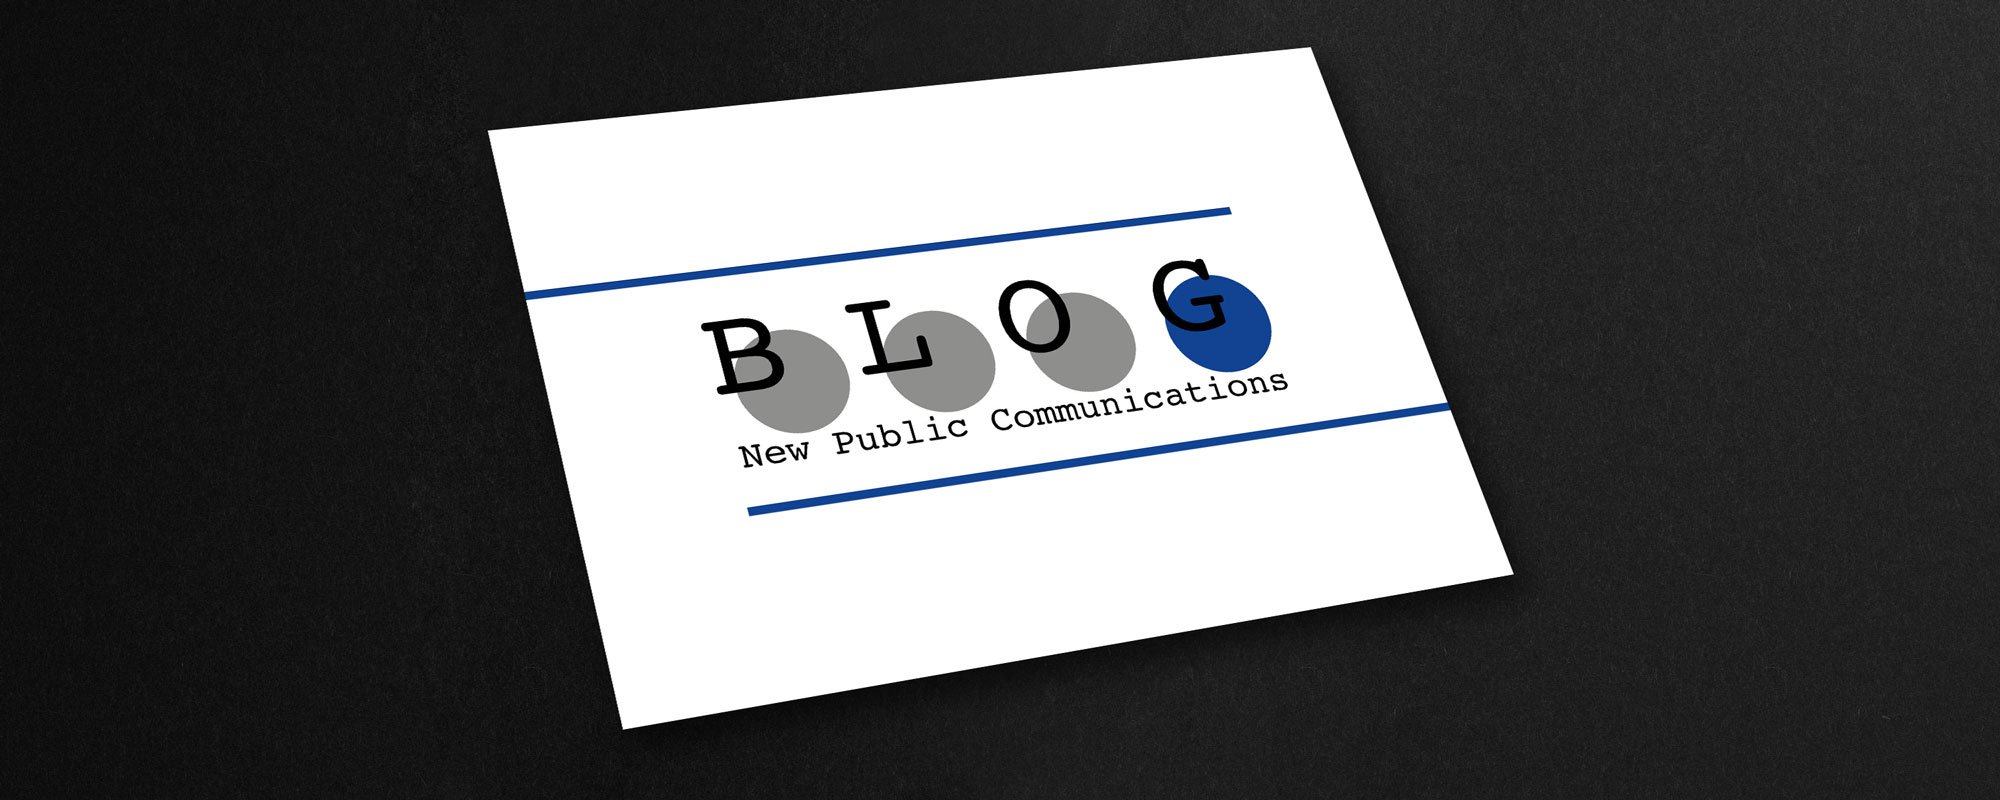 blog new public communication